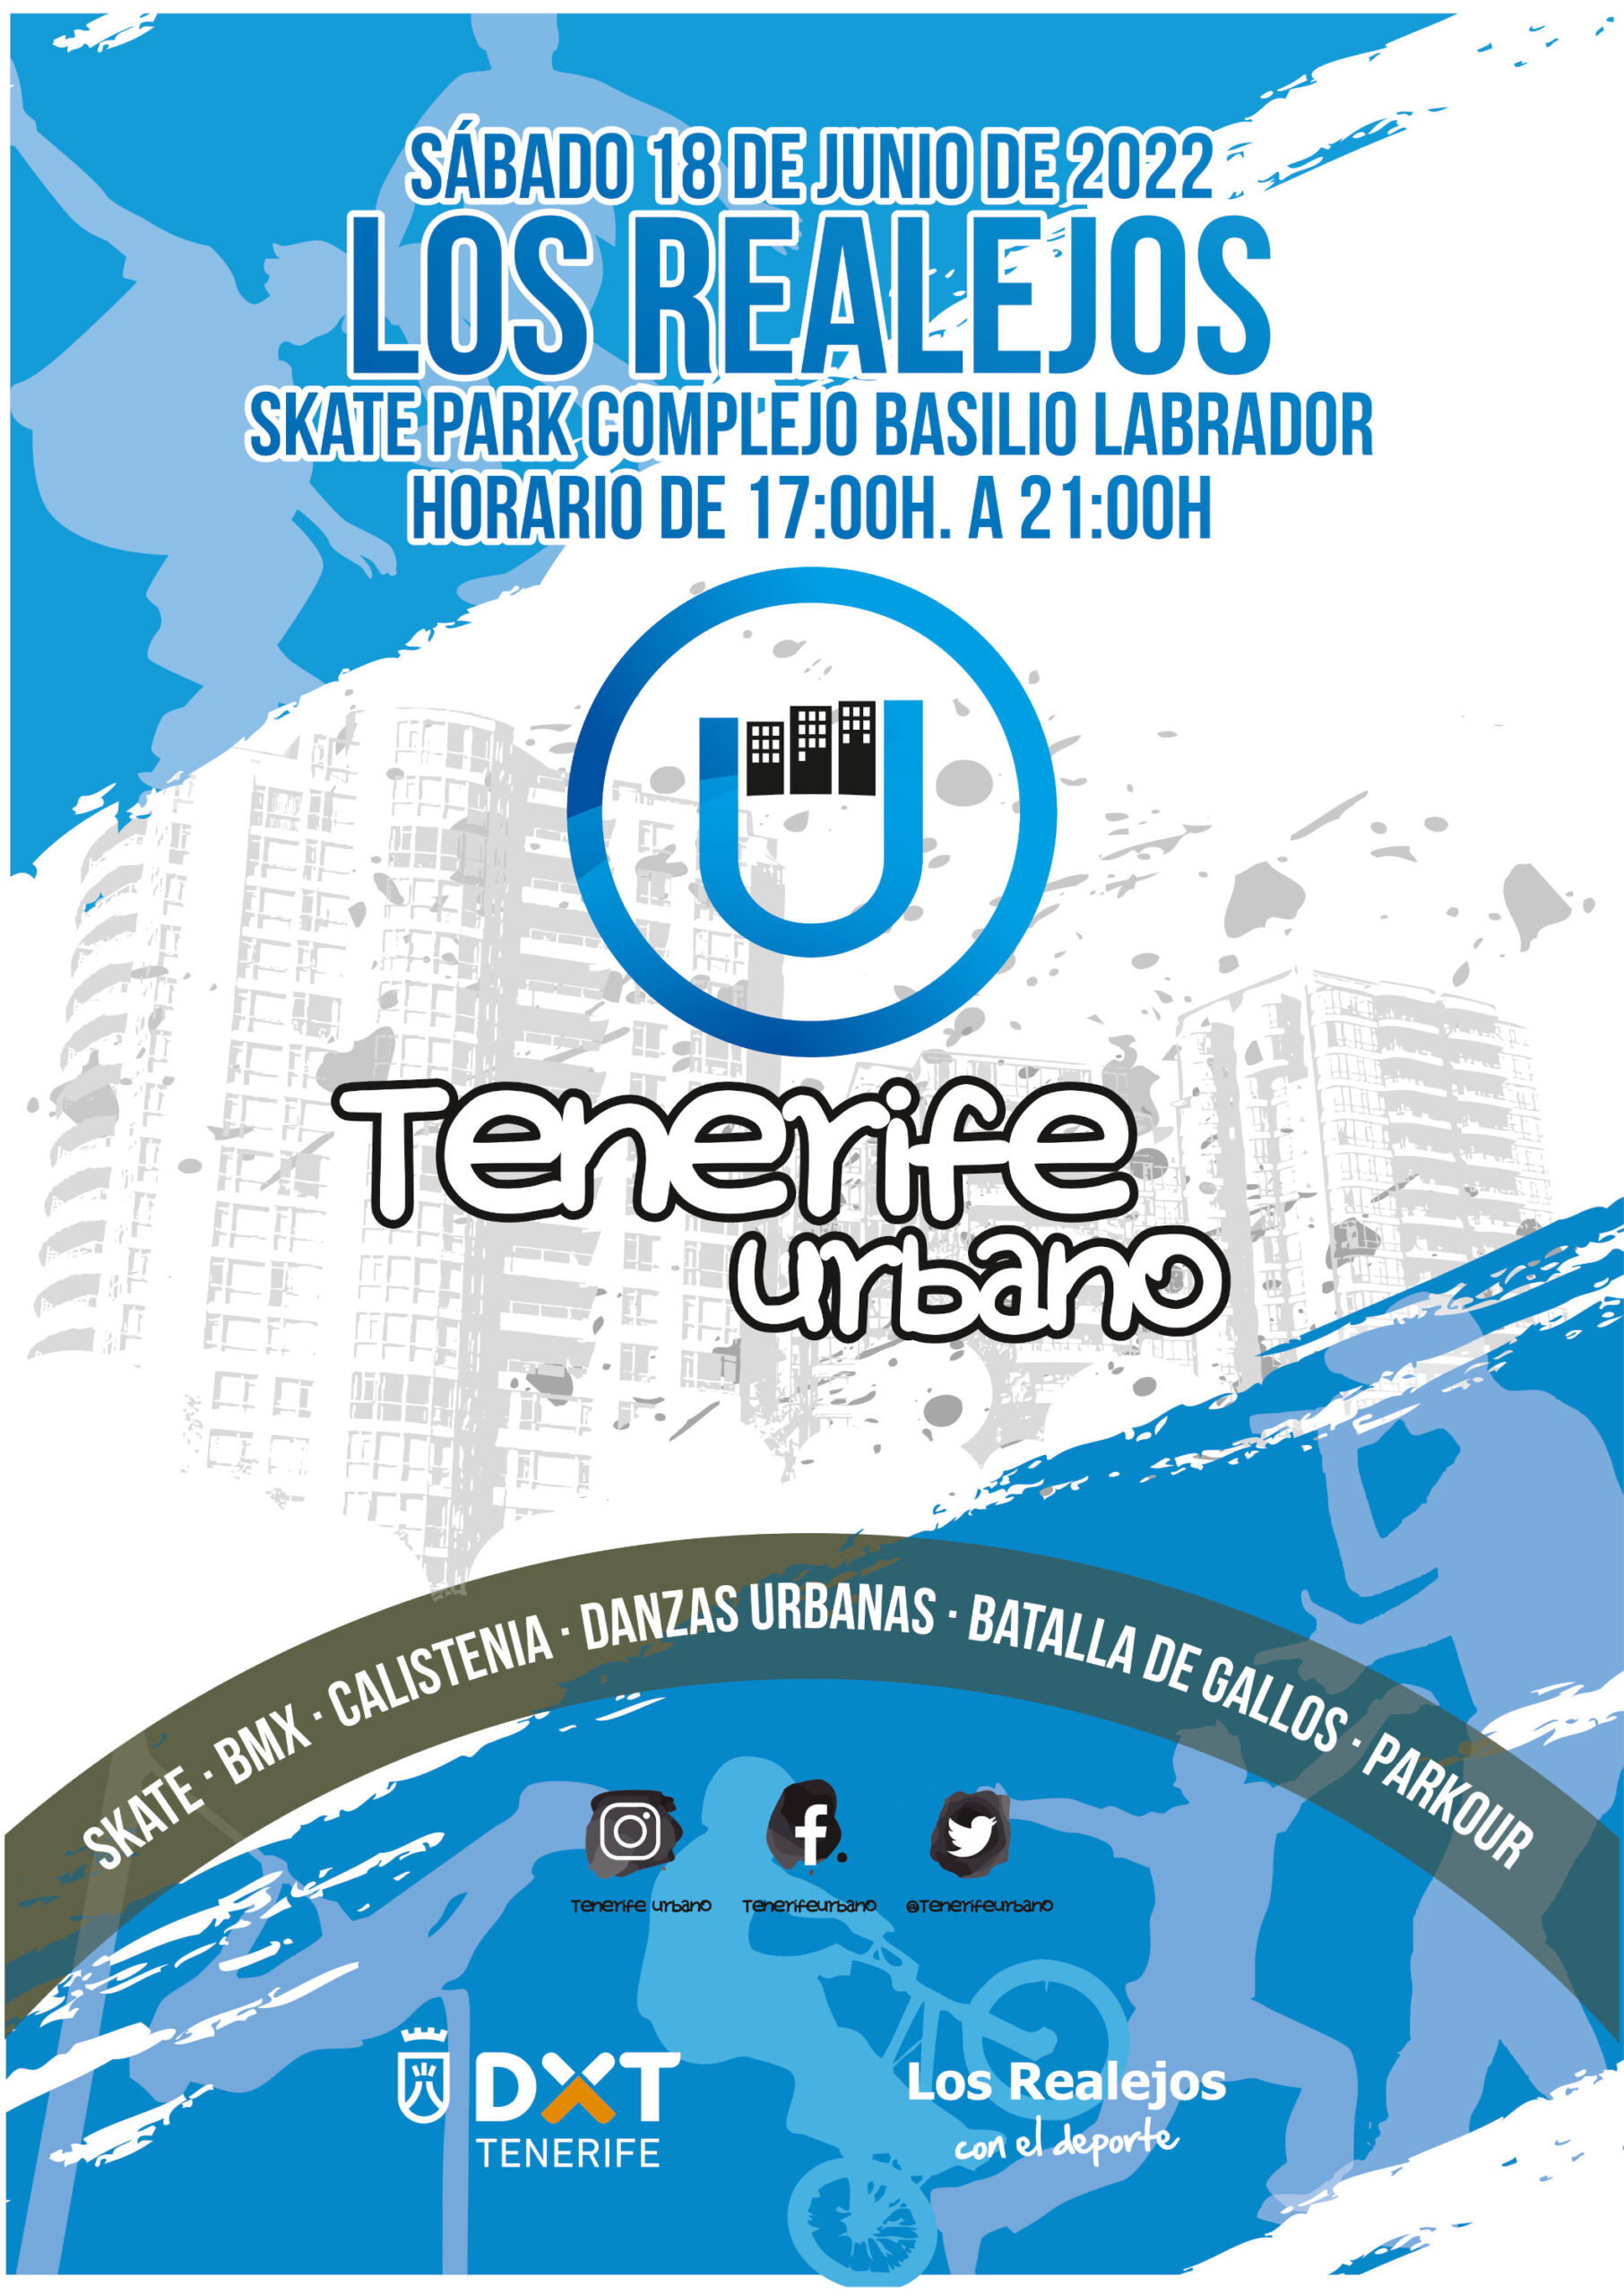 Tenerife Urbano